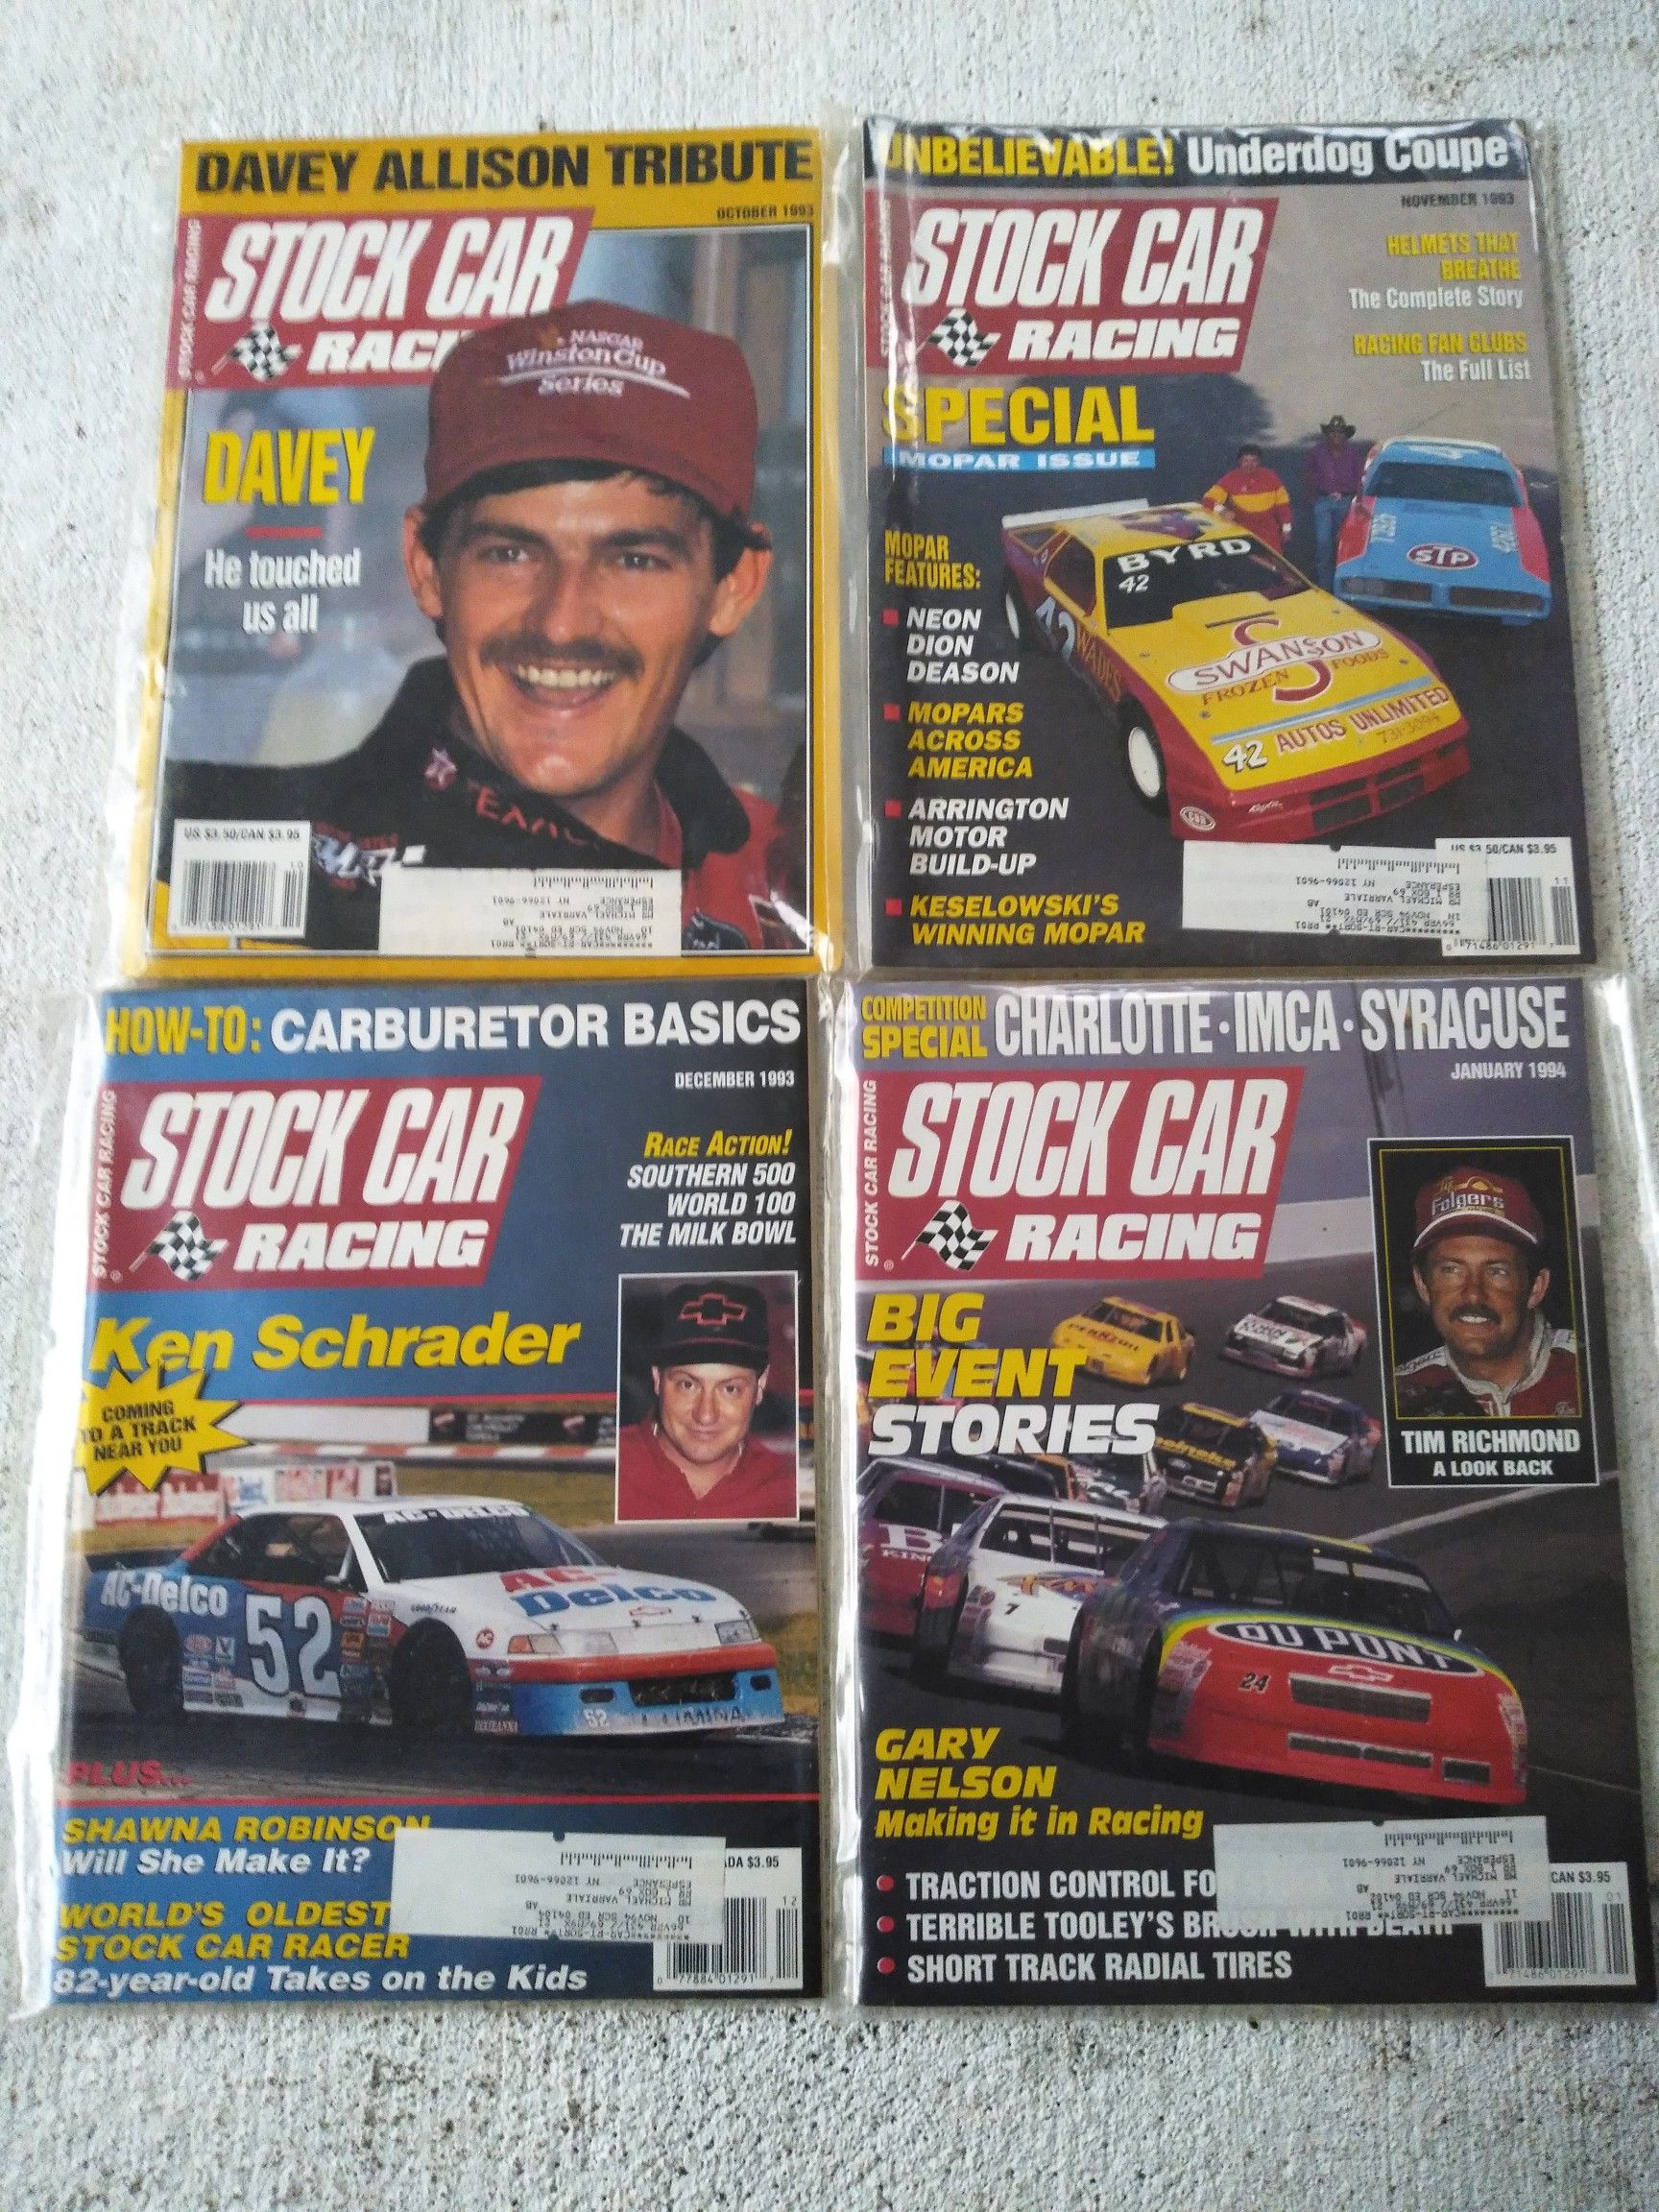 Racing magazines